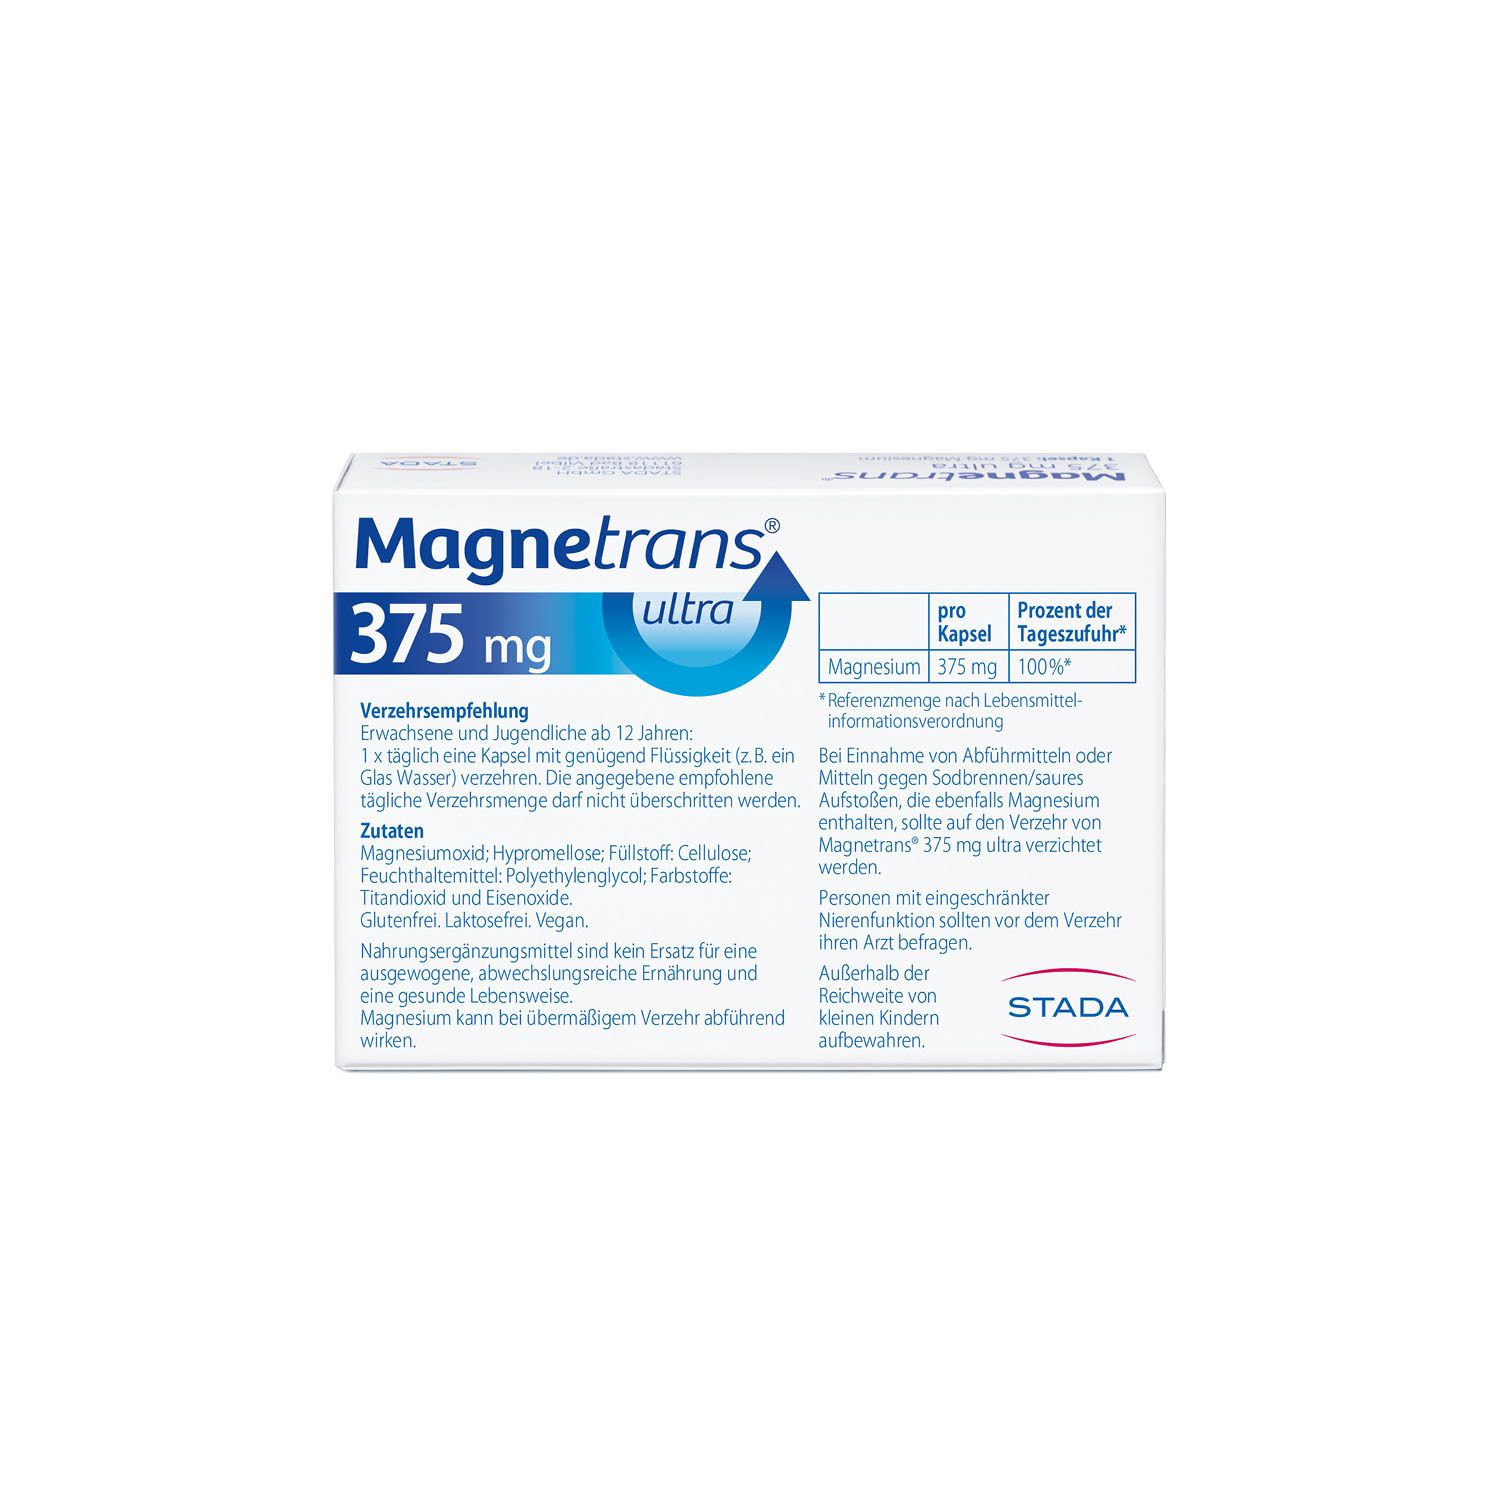 Magnetrans® ultra Capsules 375 mg